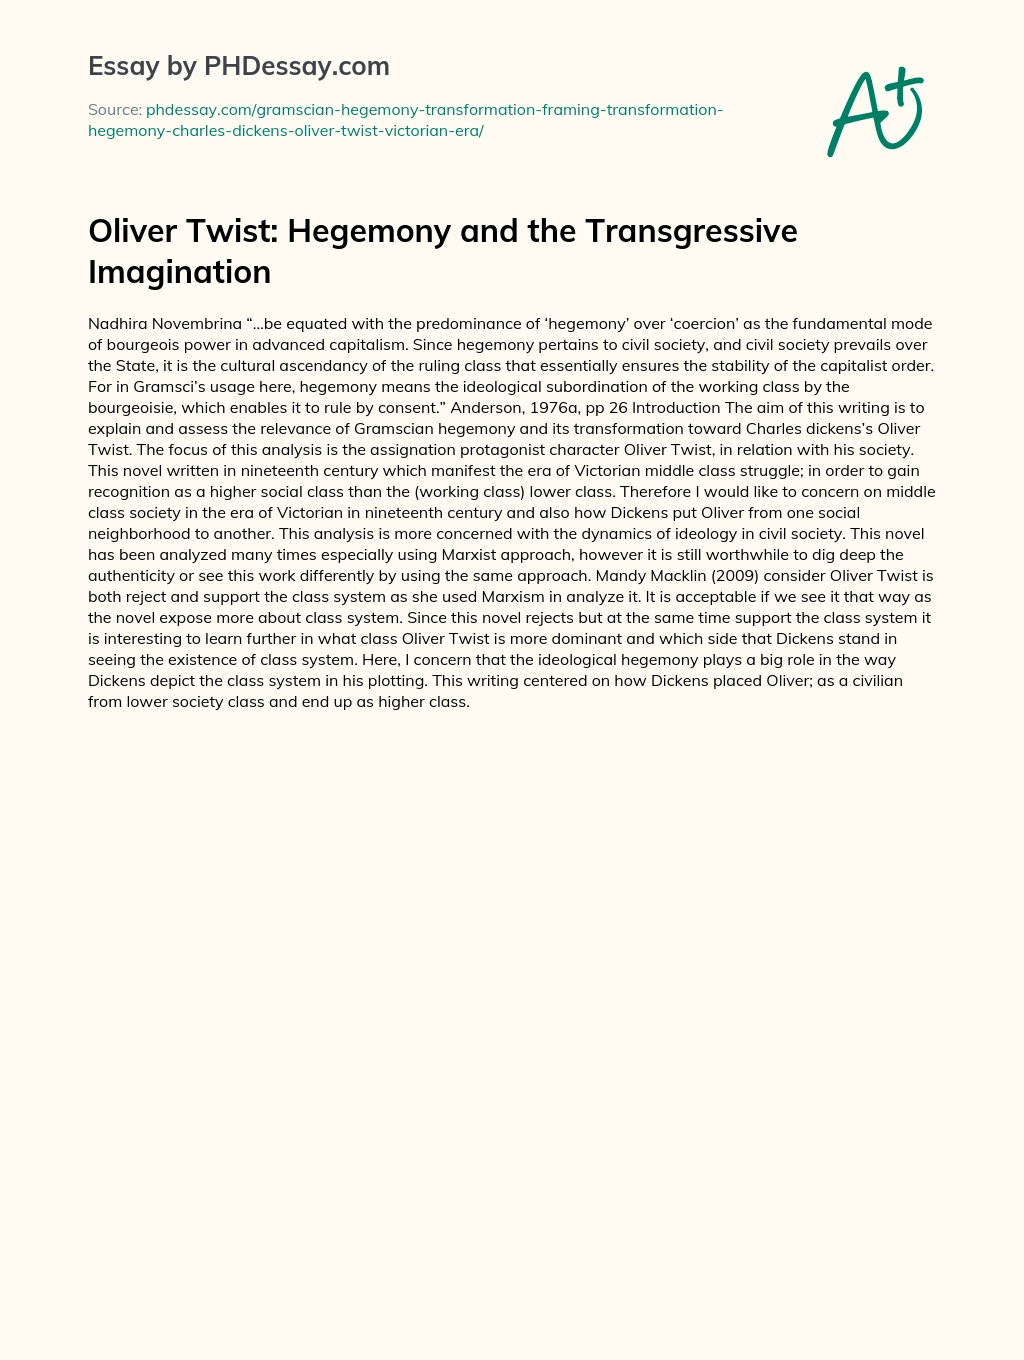 Oliver Twist: Hegemony and the Transgressive Imagination essay